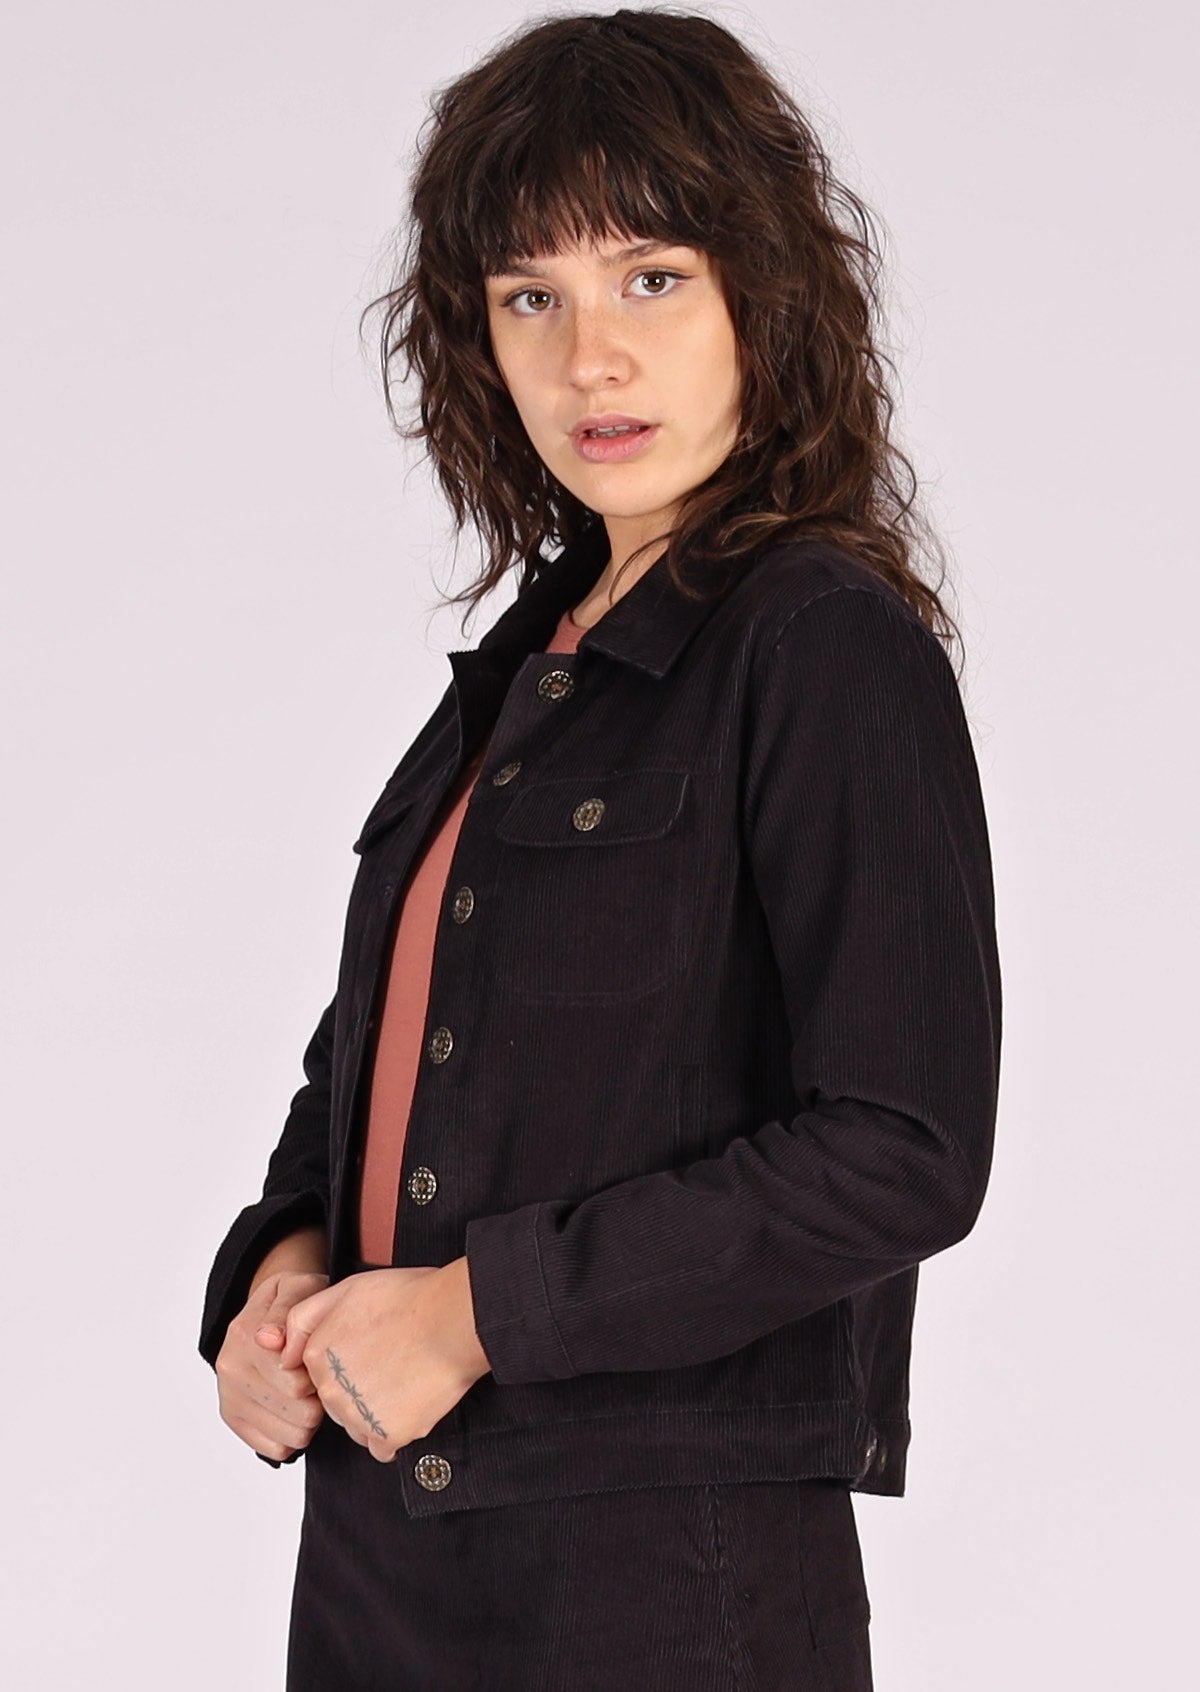 Corduroy jacket in dark grey with adjustable tabs